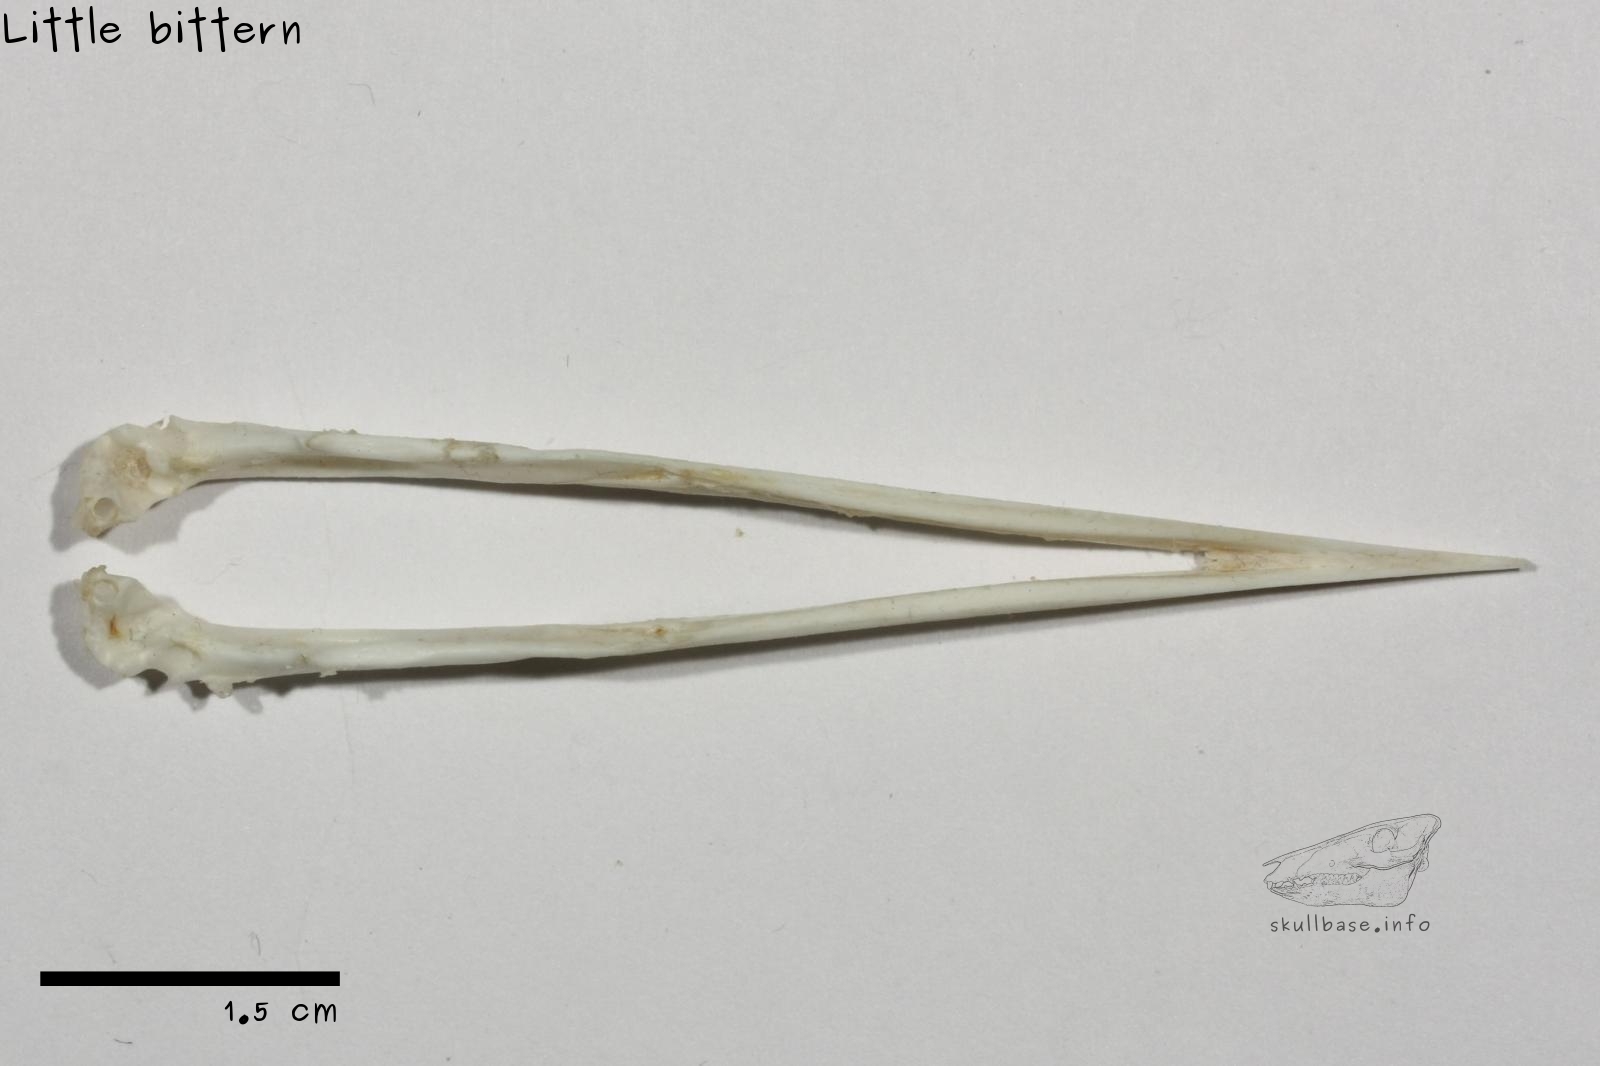 Little bittern (Ixobrychus minutus) jaw